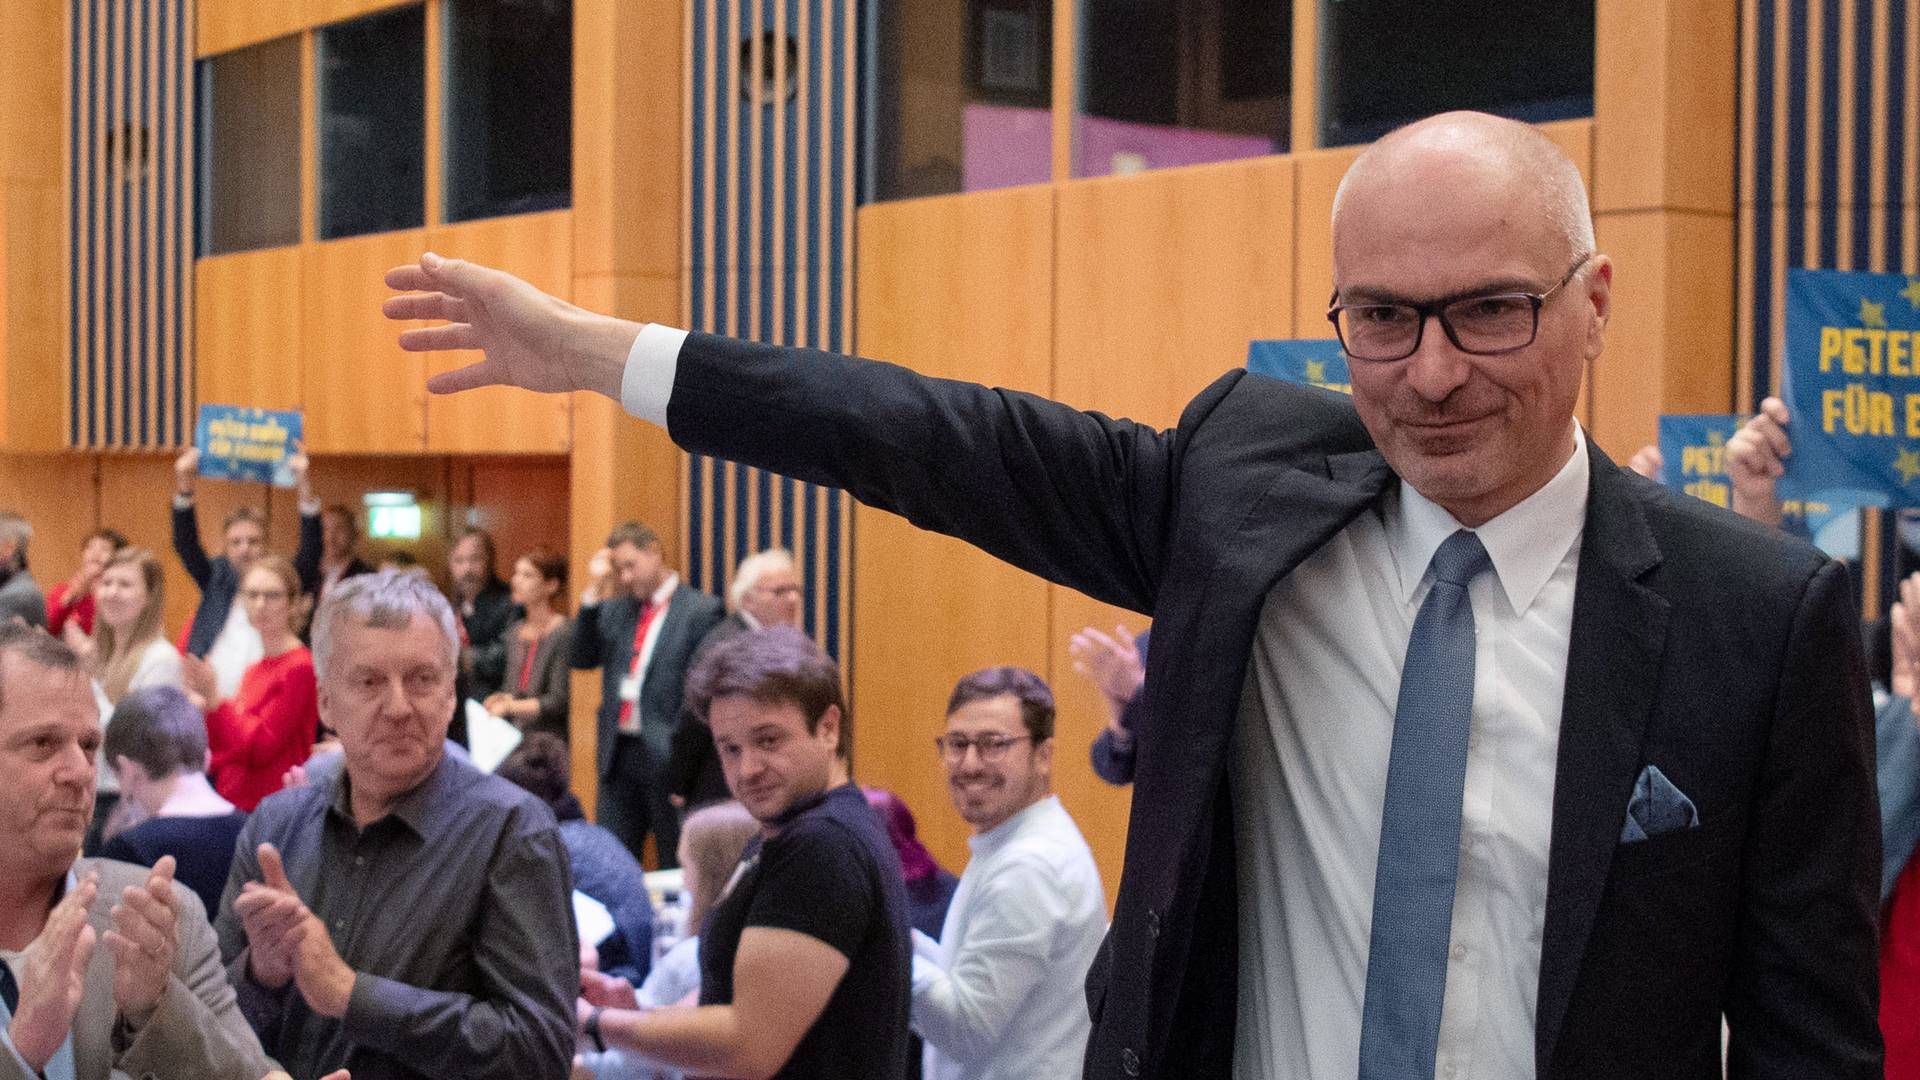 Peter Simon im Wahlkampf zum EU-Parlament | Foto: picture alliance/dpa | Marijan Murat